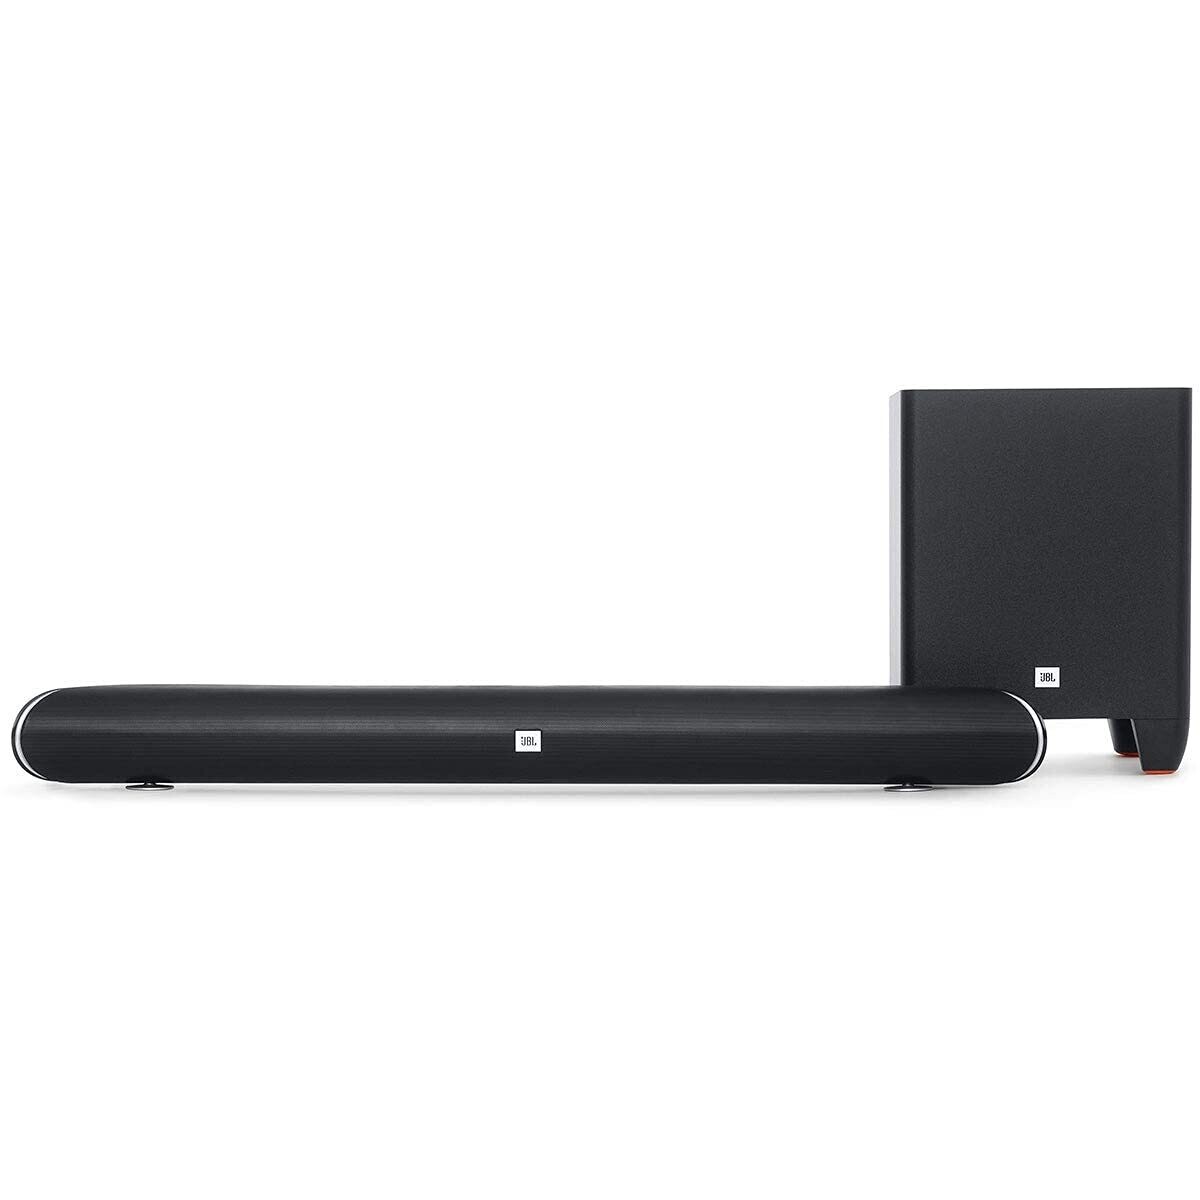 JBL Cinema SB250 200 Watt 2.1 Channel Wireless Bluetooth Soundbar with Dolby Digital (Black)